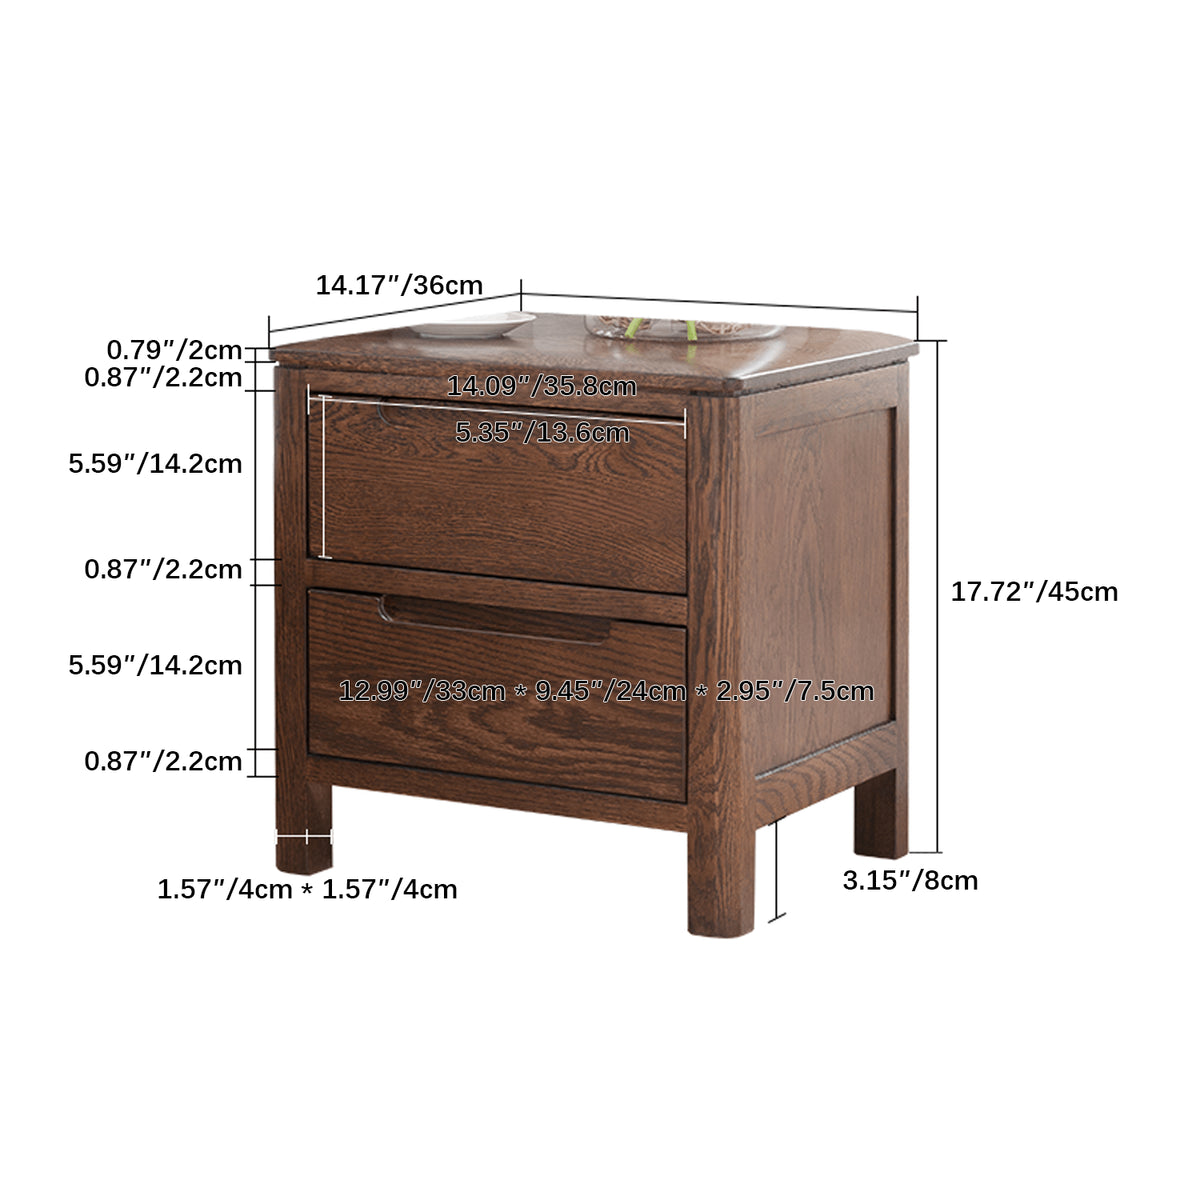 Natural Brown Oak & Tung Wood Bedside Cupboard - Stylish & Durable Nightstand hym-473